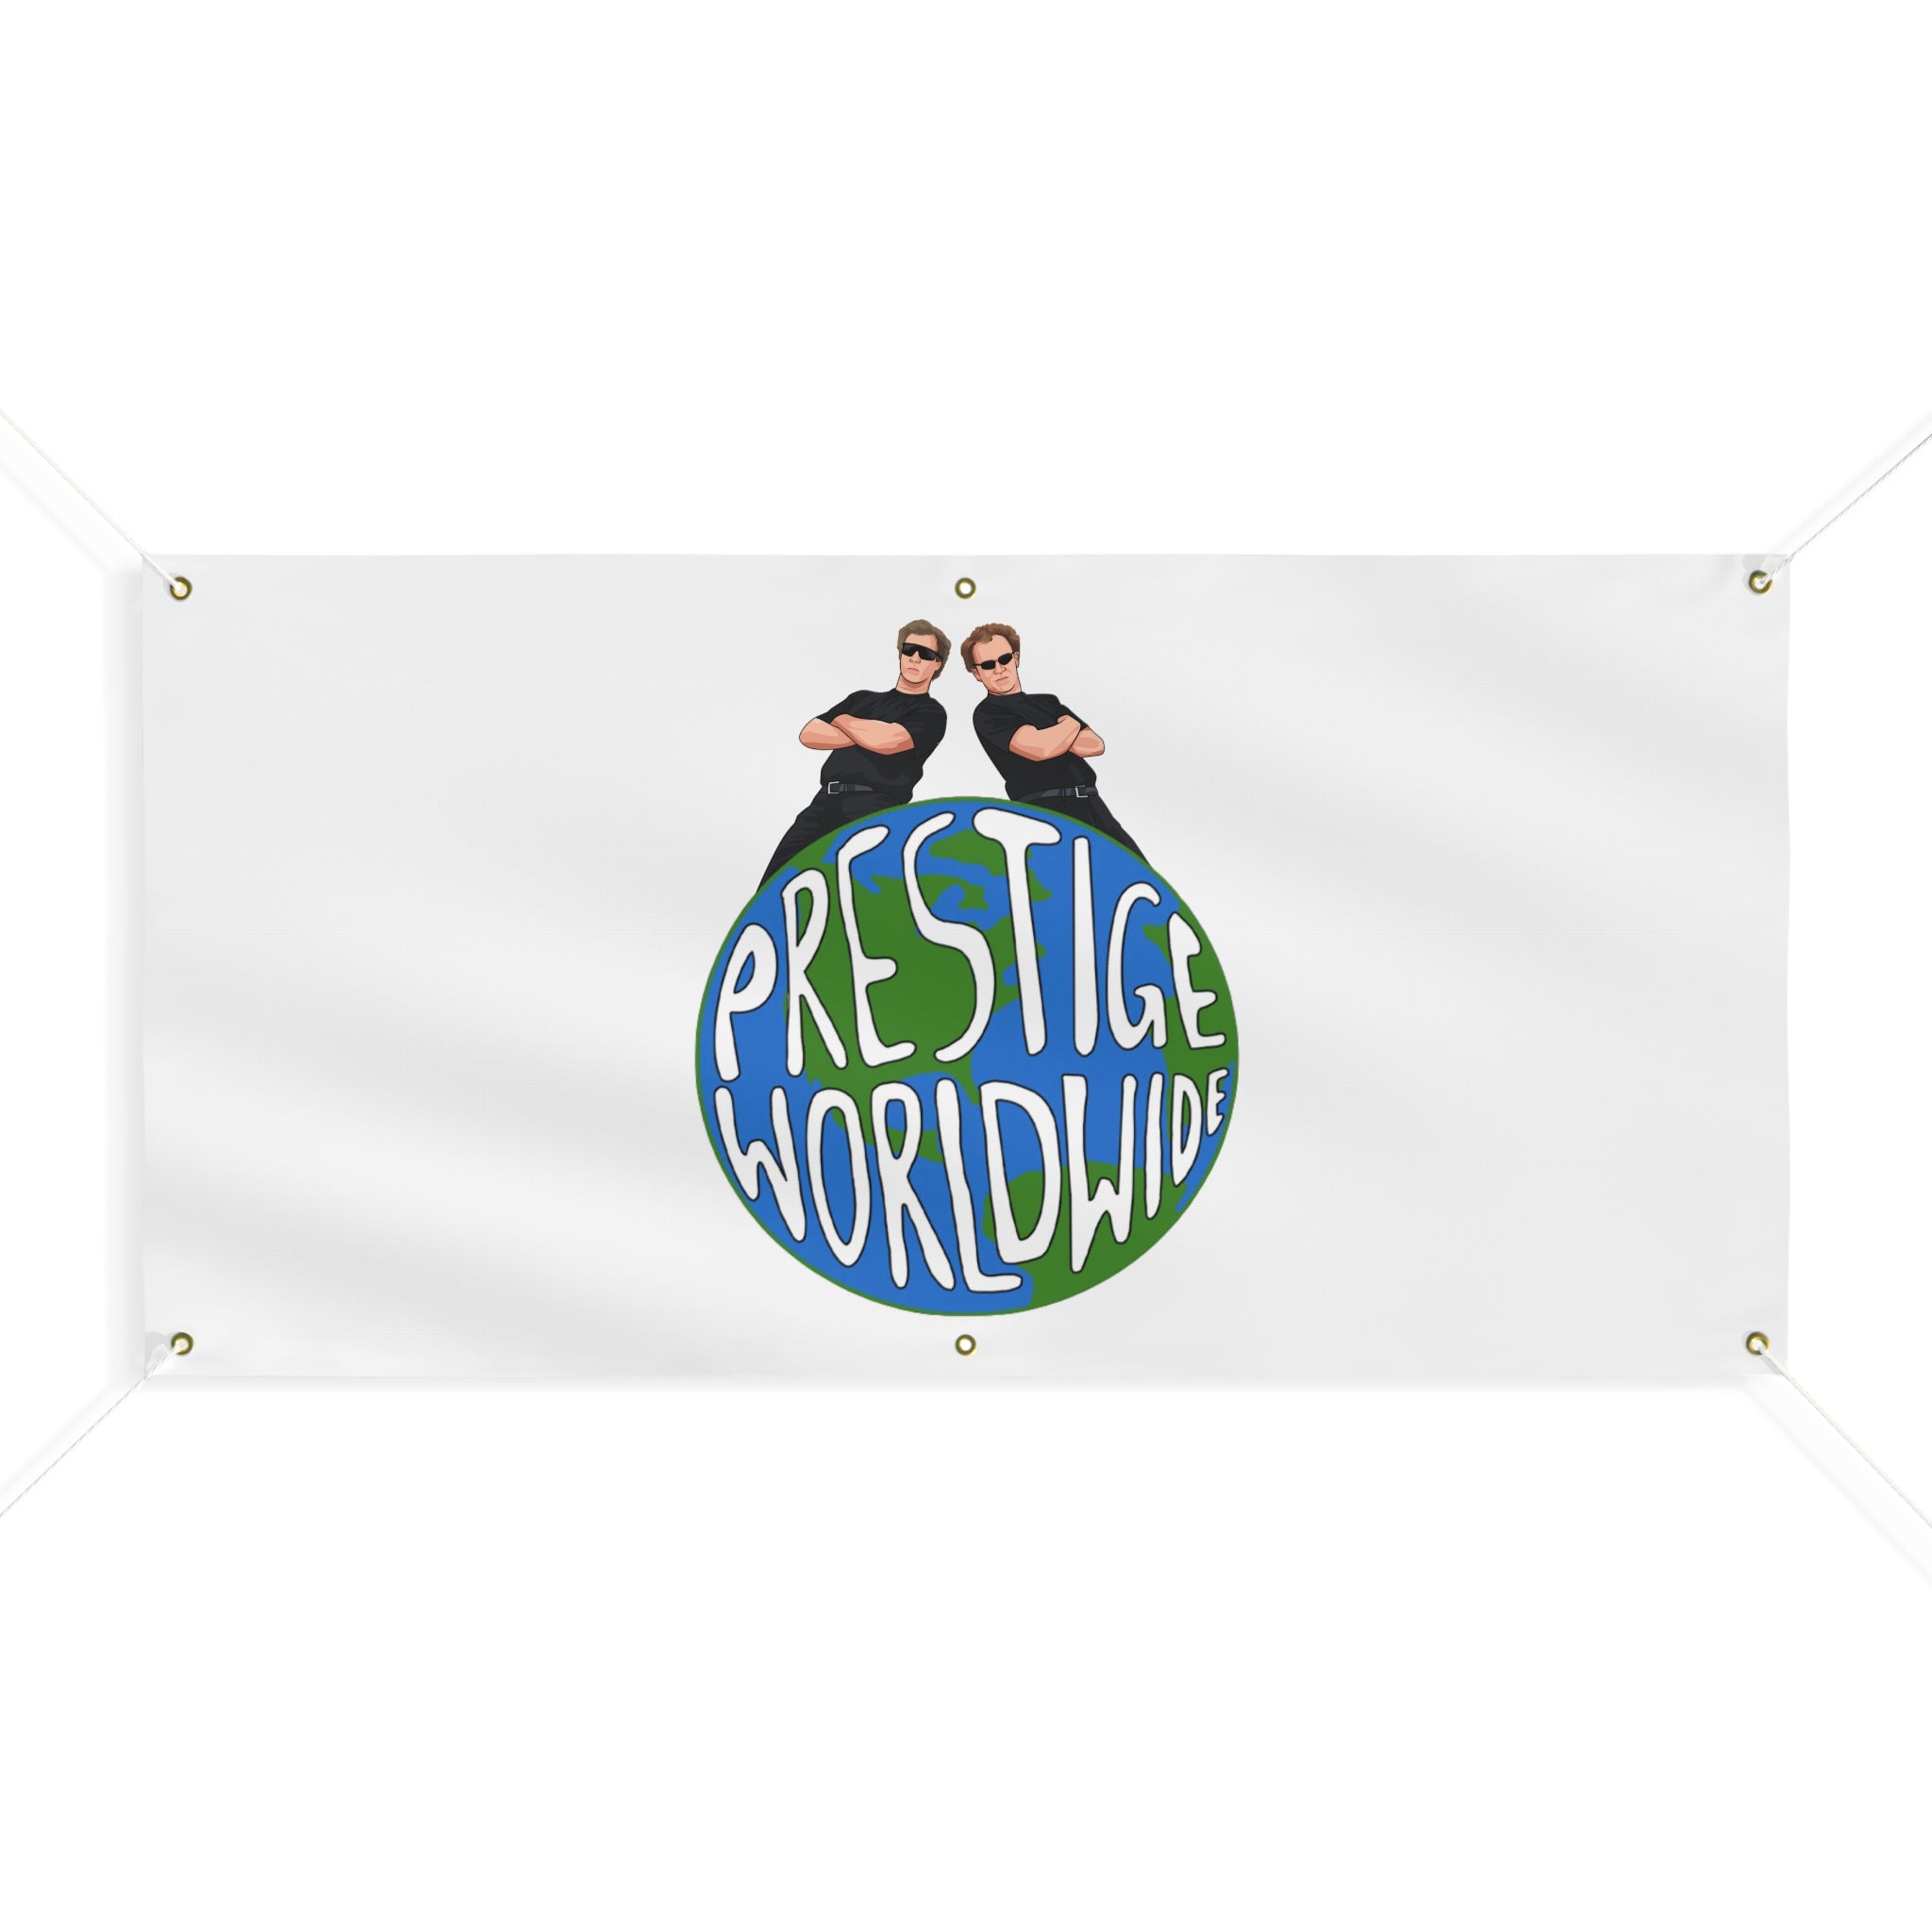 Prestige Worldwide (Step Brothers) Flag